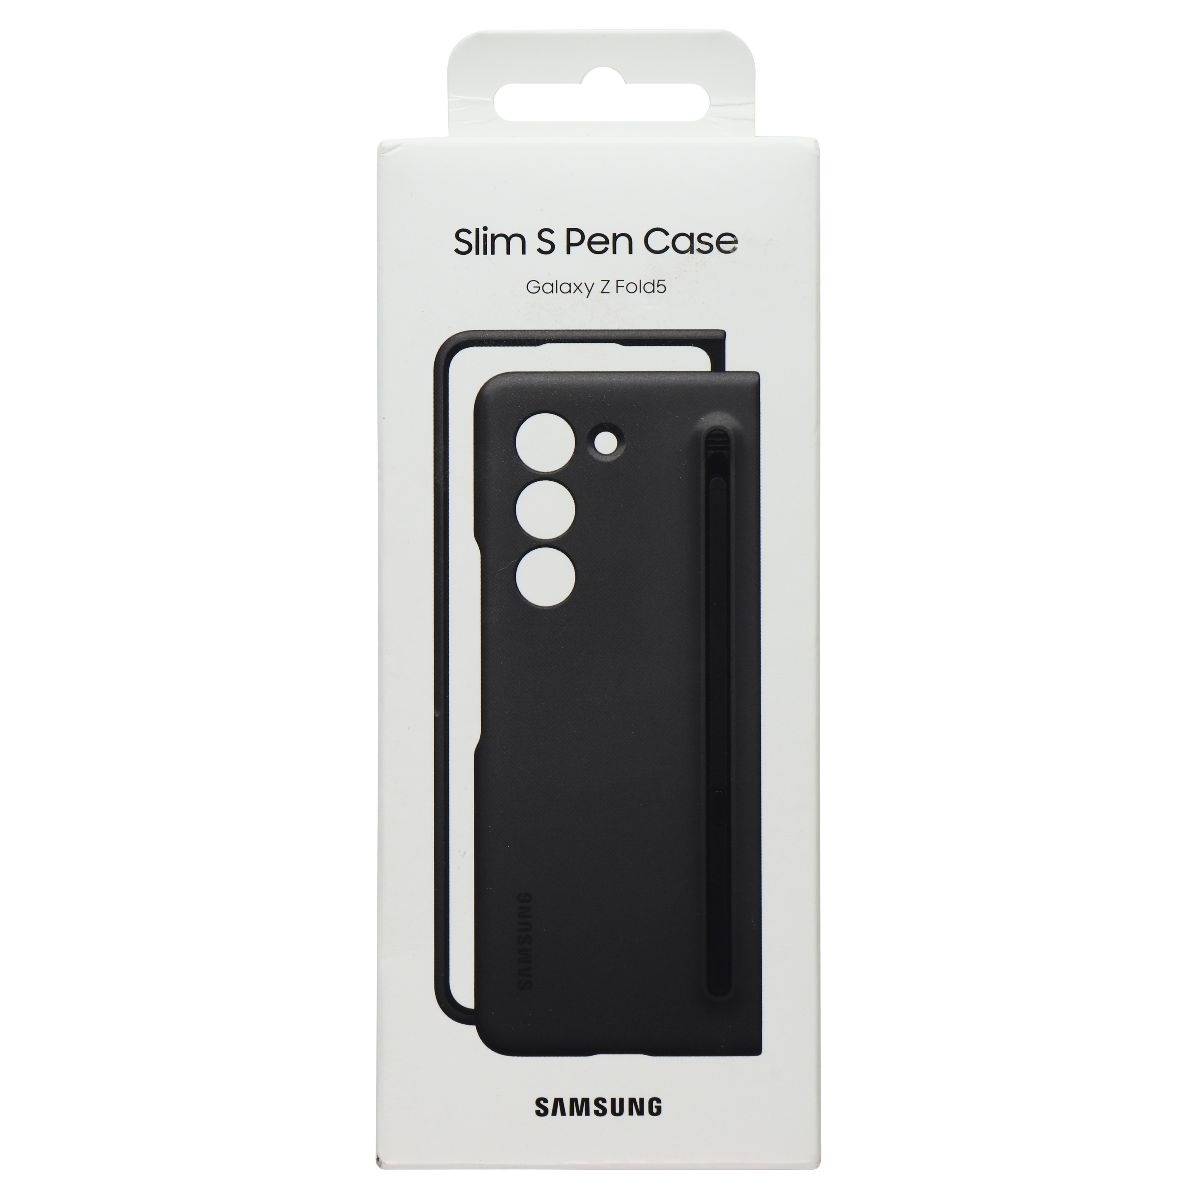 Samsung Official Slim S Pen Case For Samsung Galaxy Z Fold5 - Graphite (Refurbished)